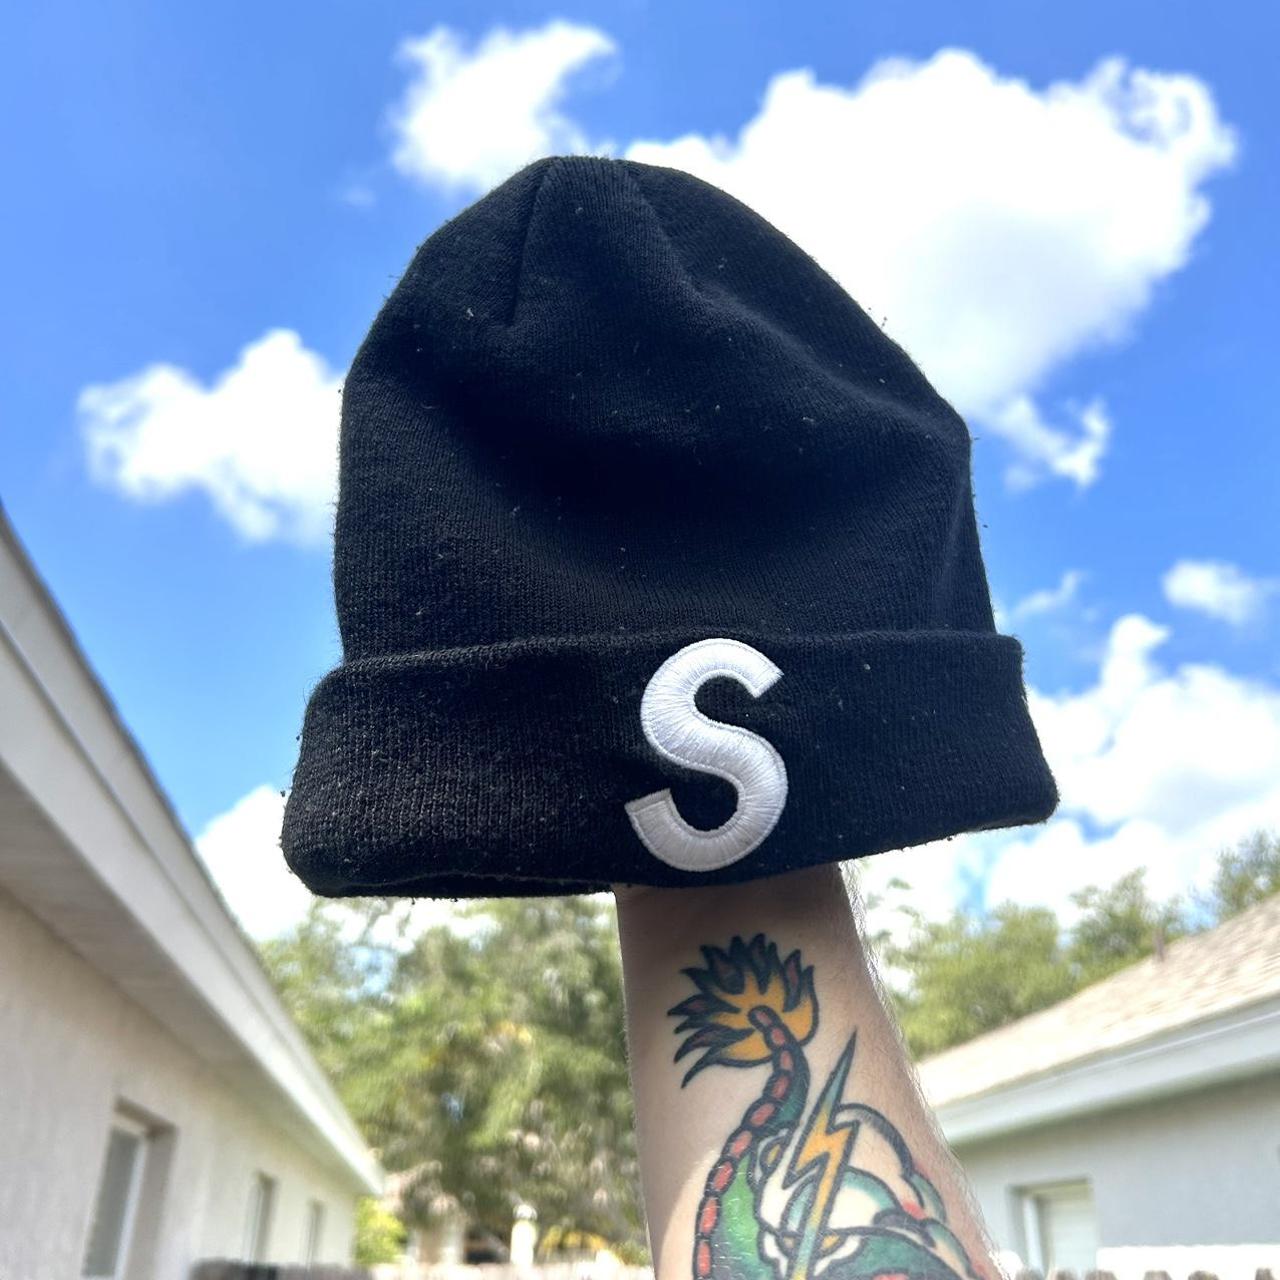 Supreme Beanie Black Hats for Men for sale